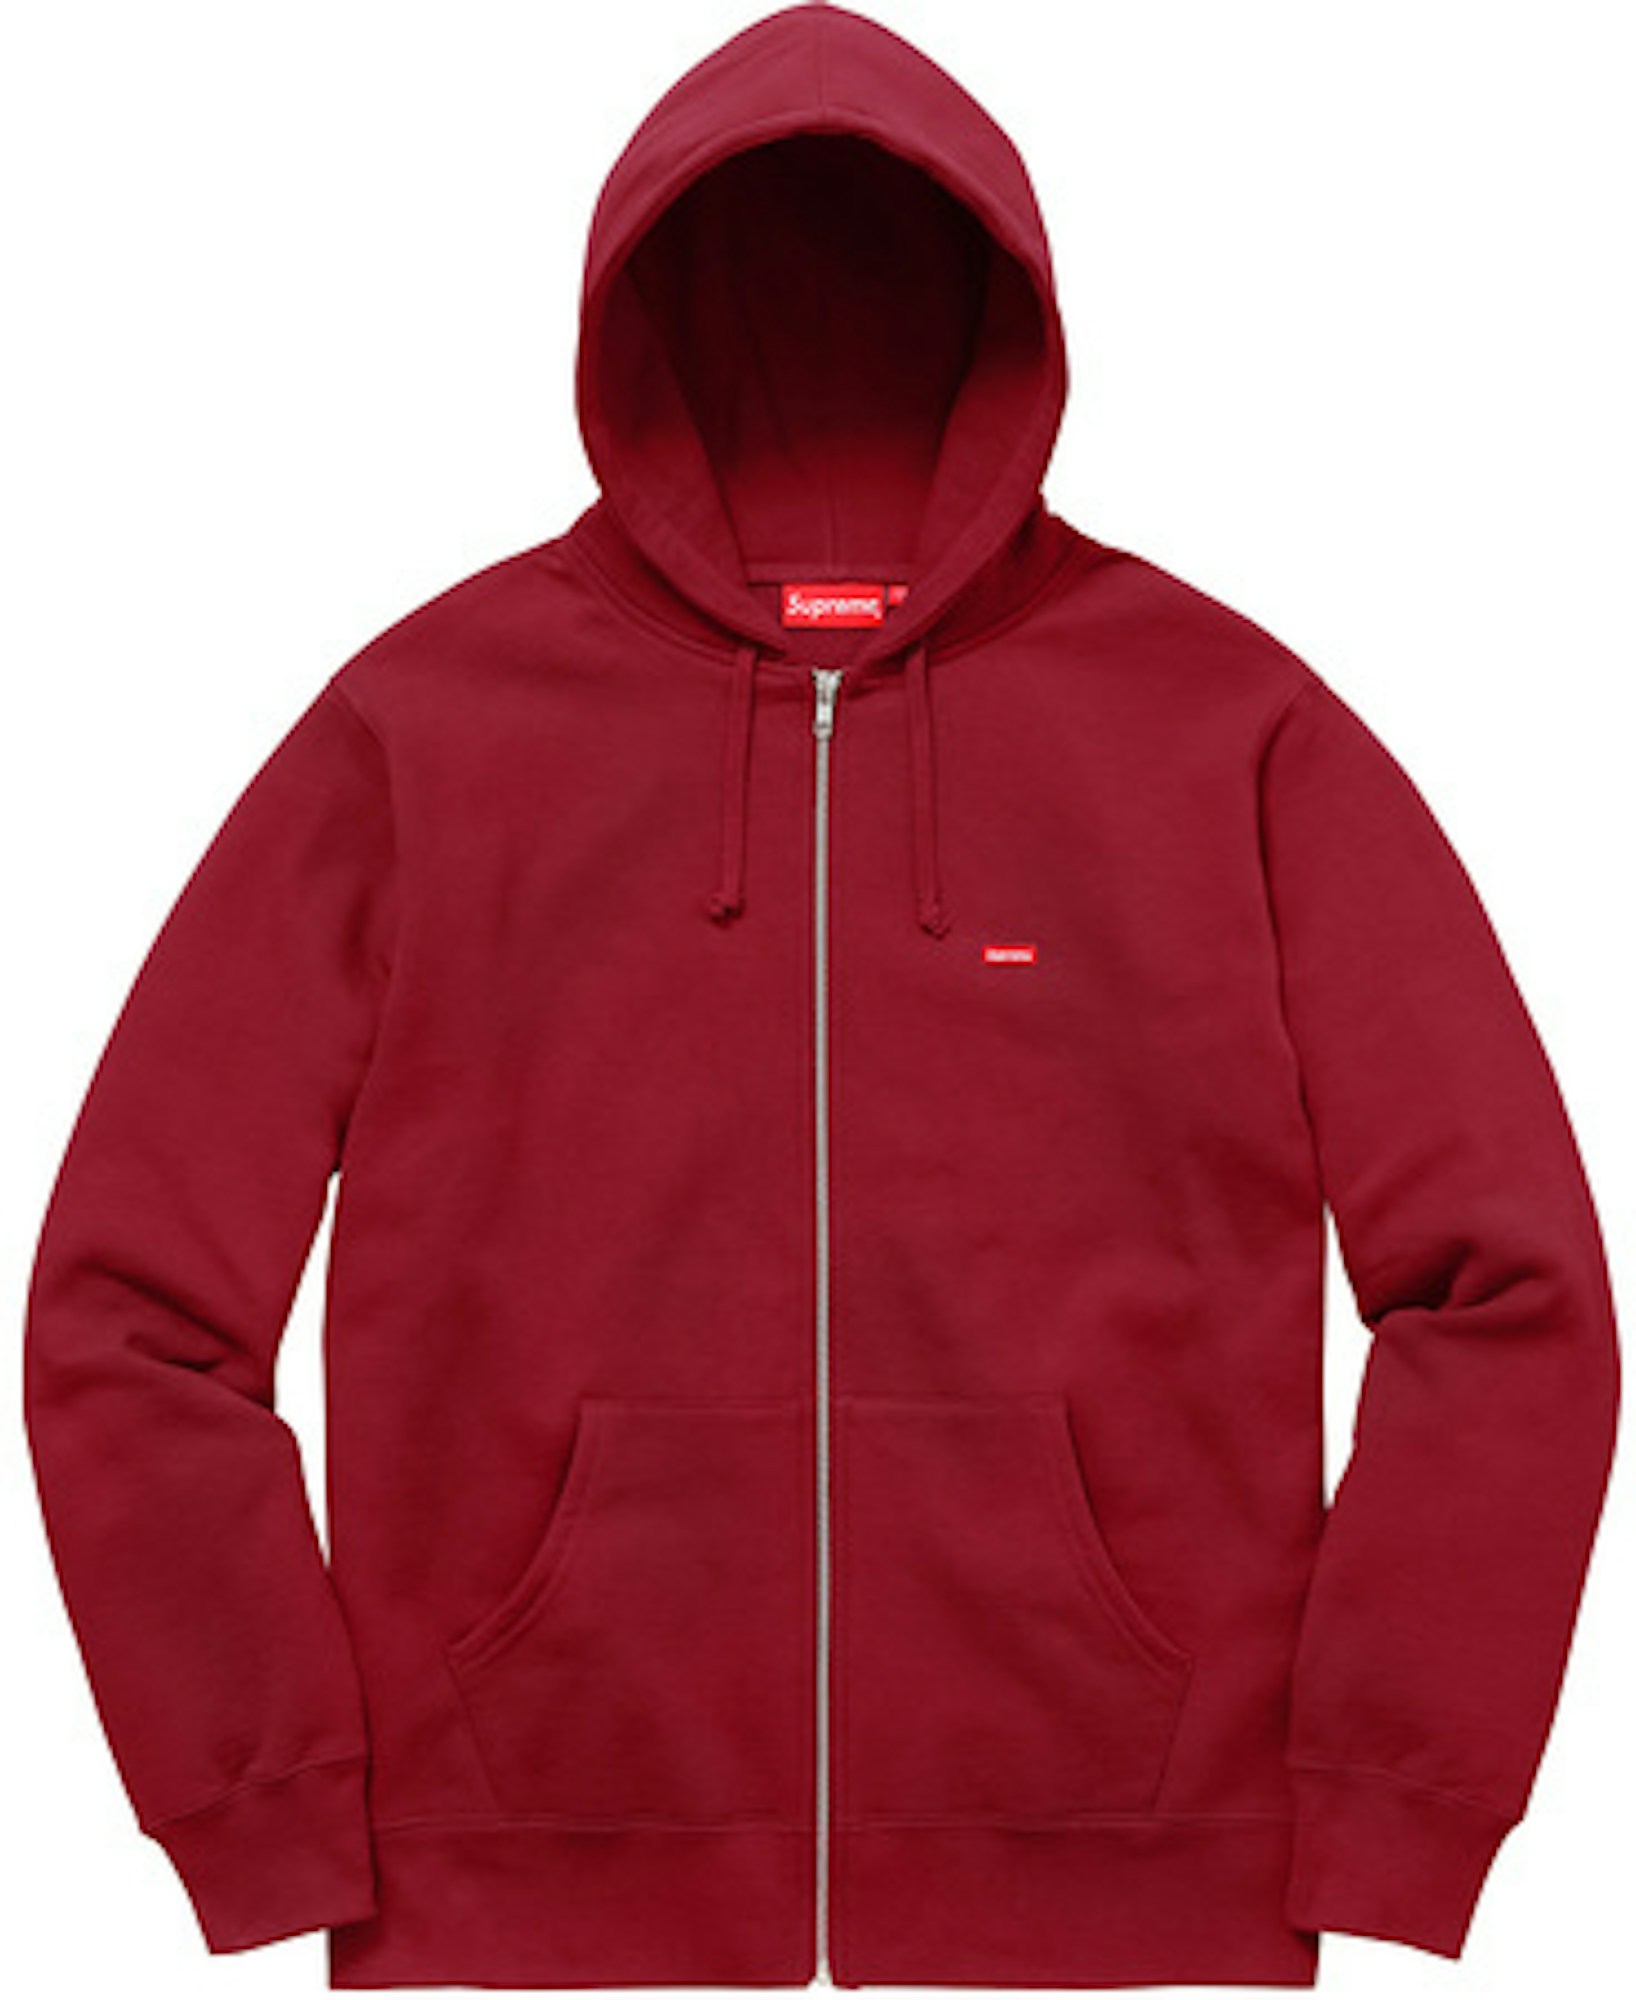 Supreme Small Box Logo Zip Up Hooded Sweatshirt Cardinal - SS17